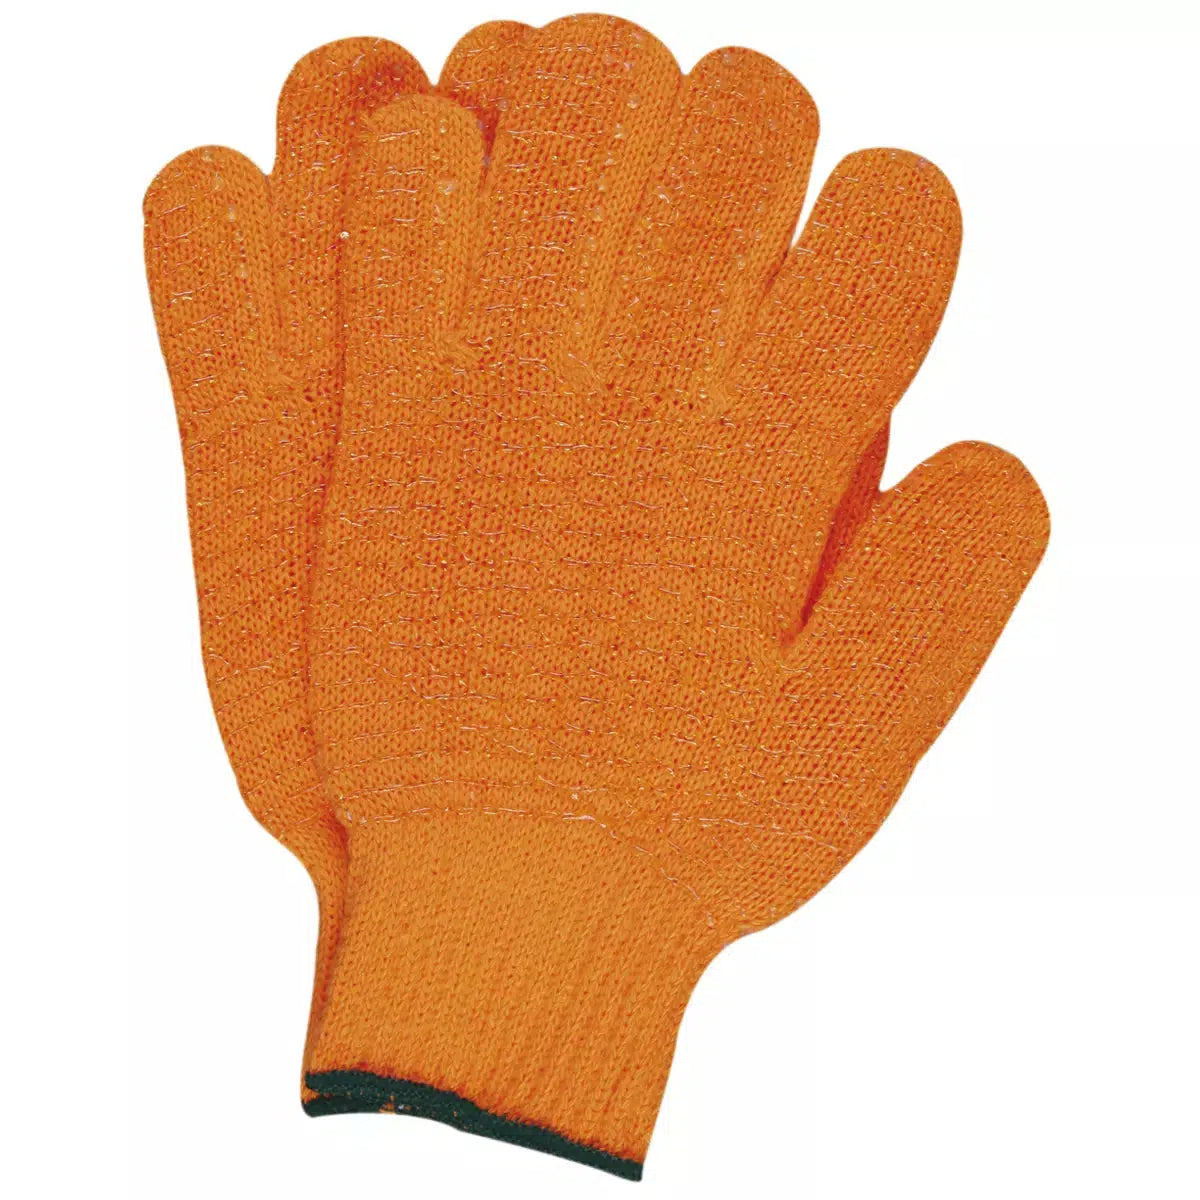 Seahorse Fishing Glove-Gloves-Seahorse Fishing Tackle-Large-Orange-Fishing Station